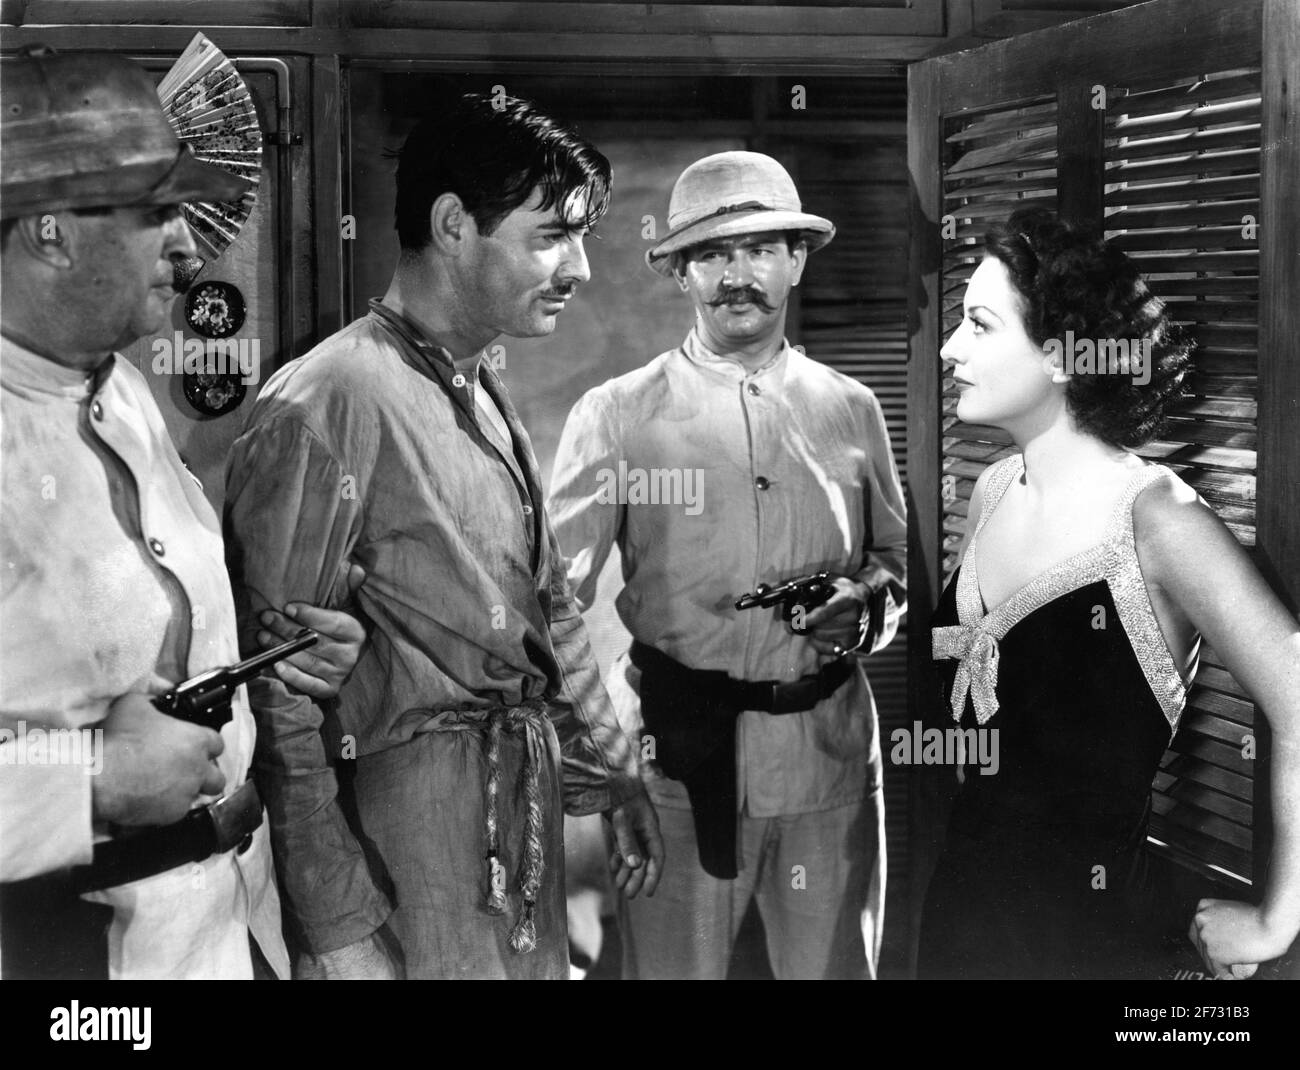 CLARK GABLE und JOAN CRAWFORD in STRANGE CARGO 1940 Regisseur FRANK BORZAGE Metro Goldwyn Mayer Stockfoto